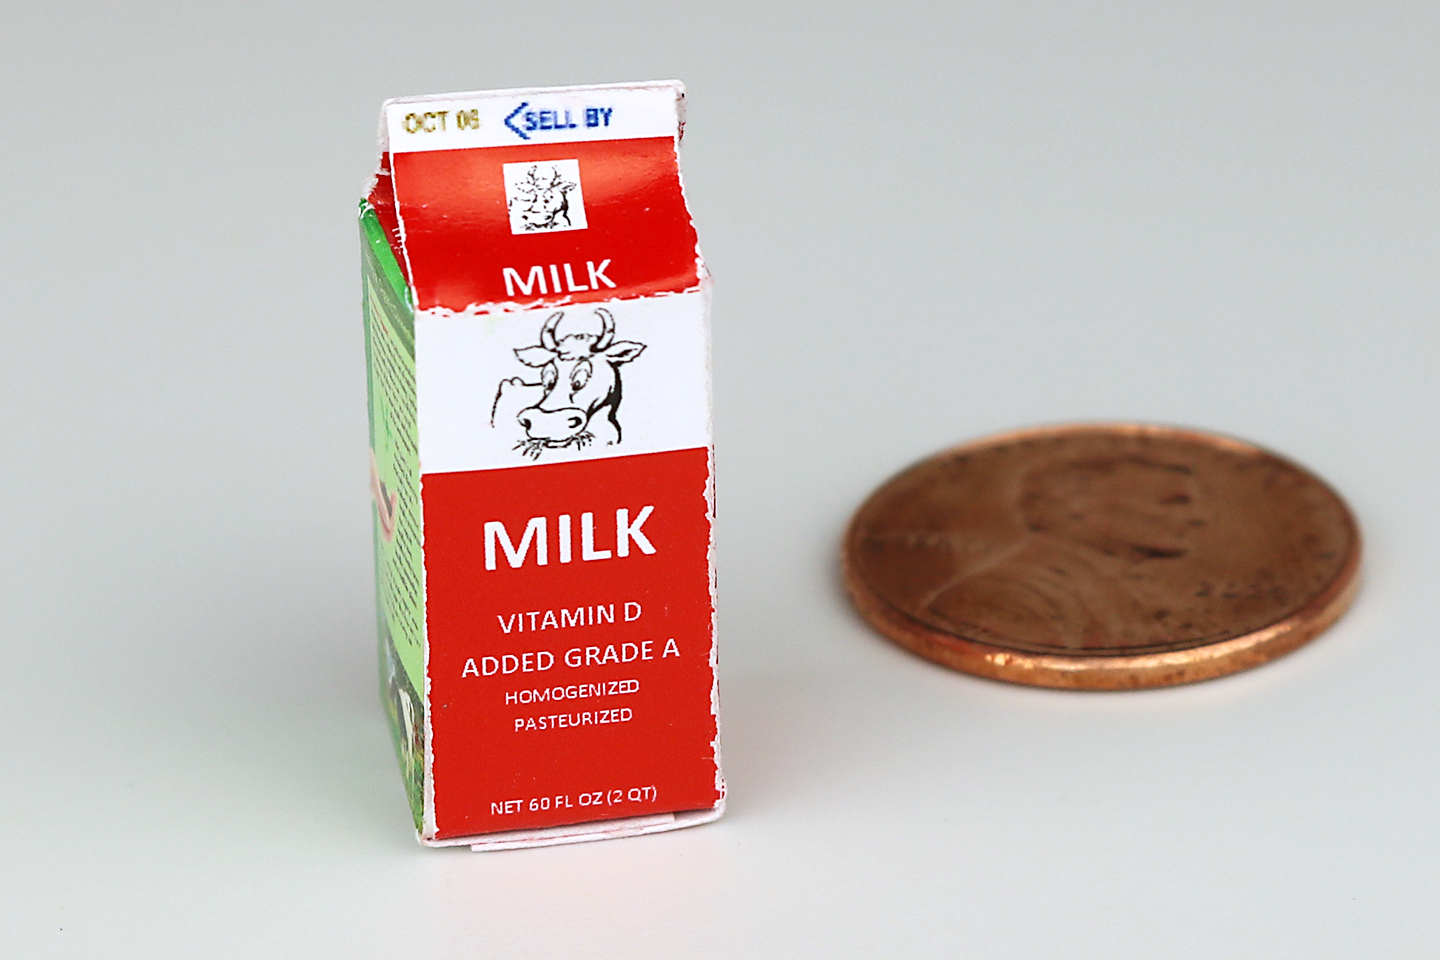 Carton of Whole Milk